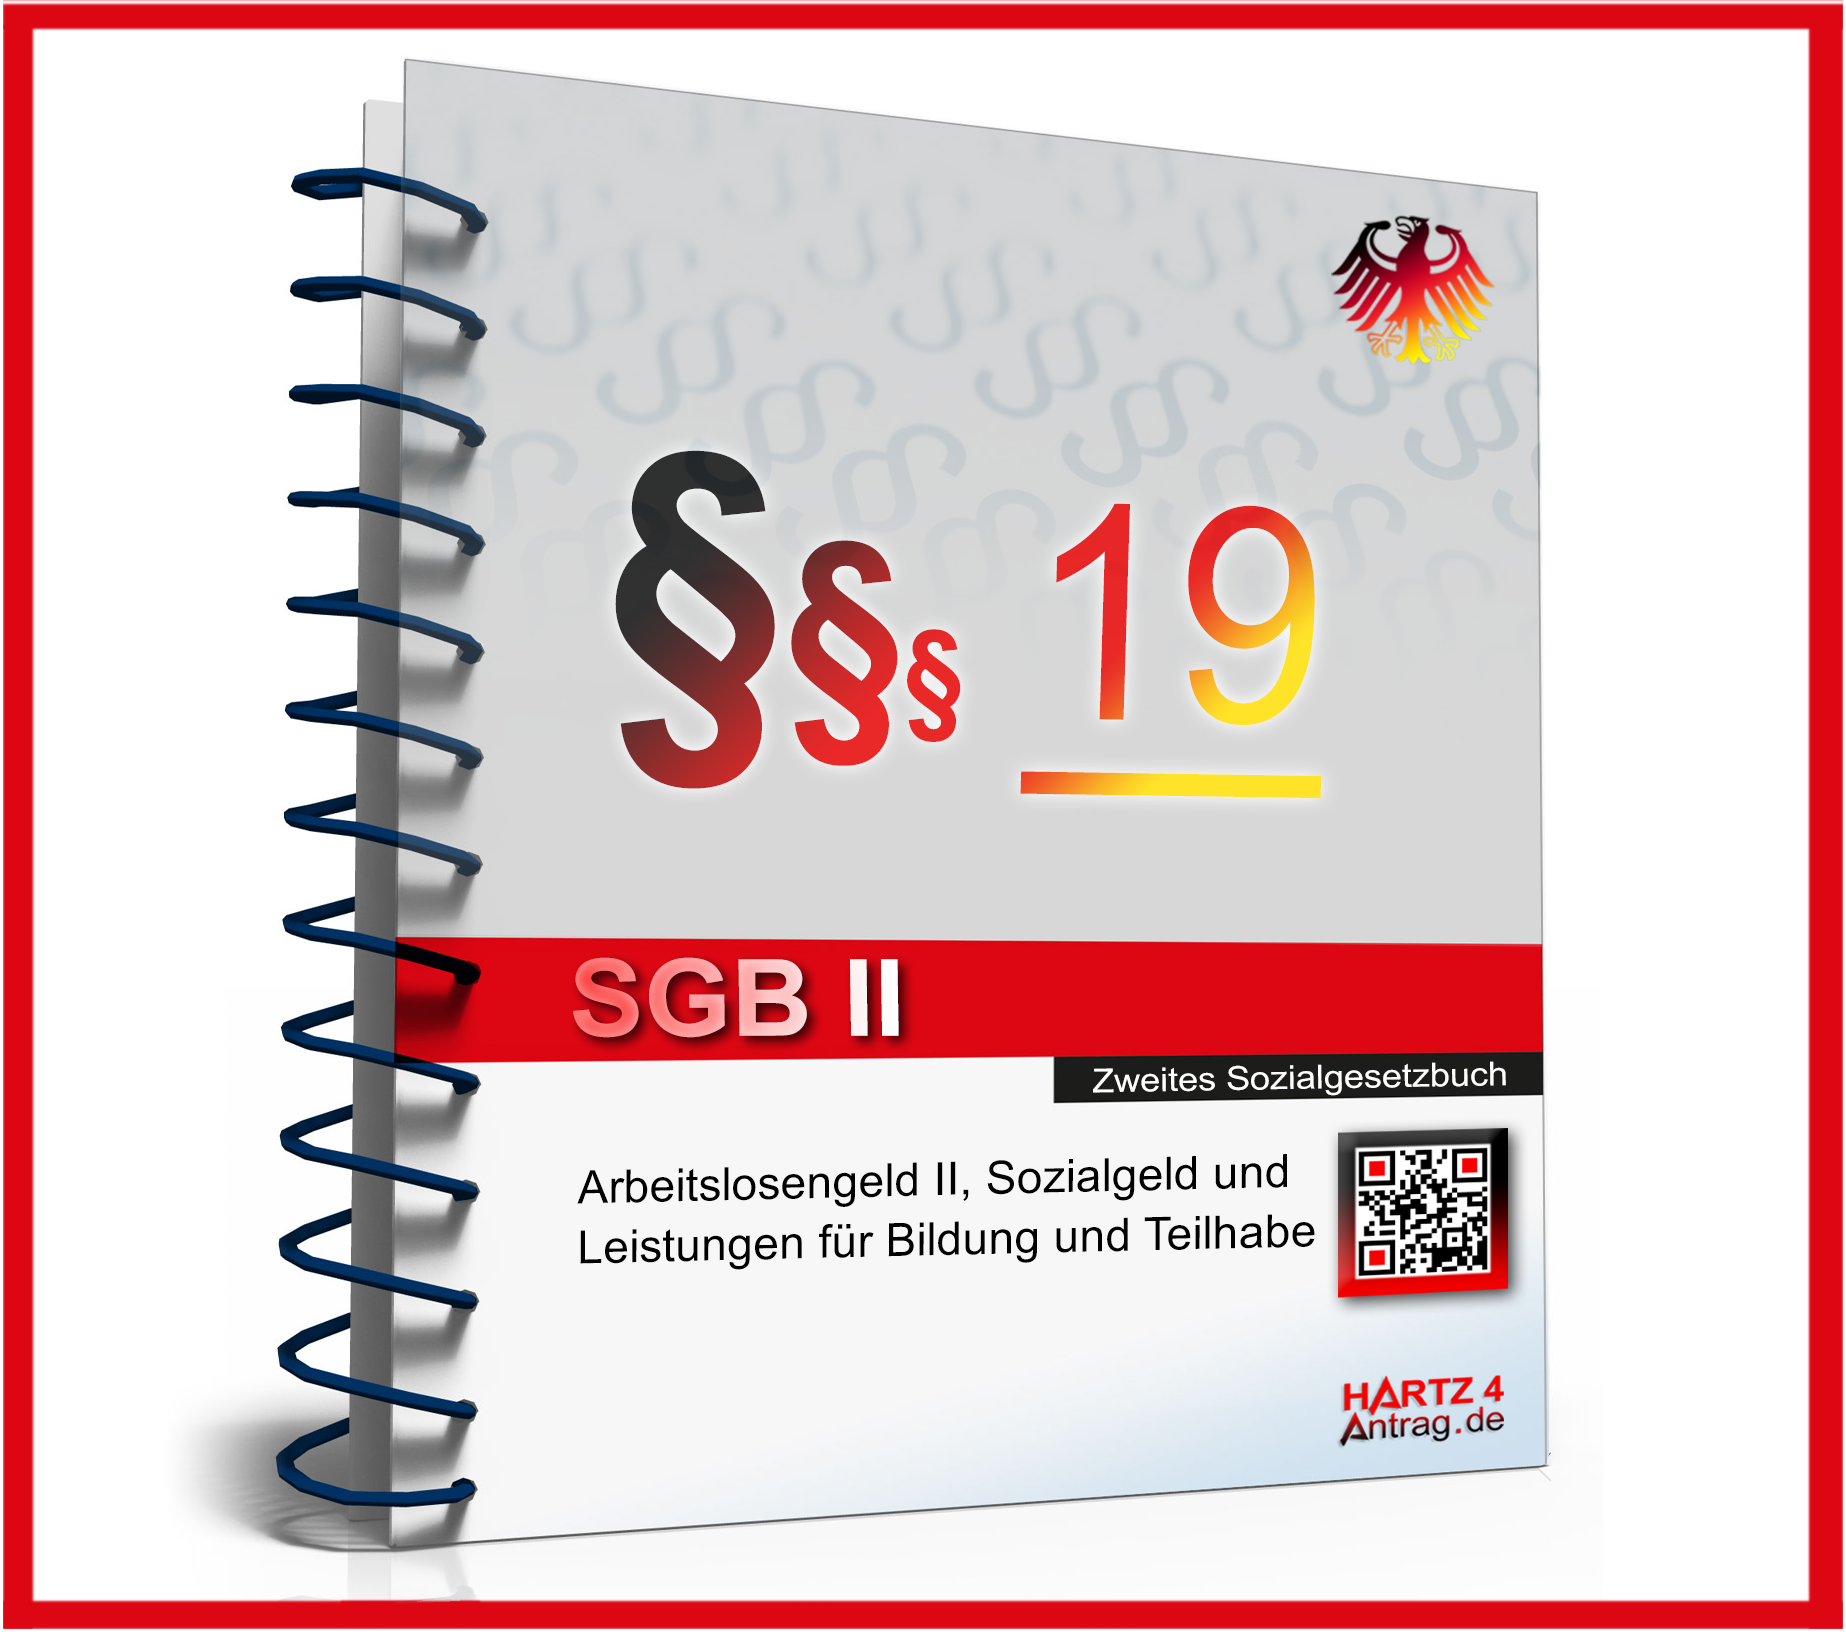 § 19 SGB II